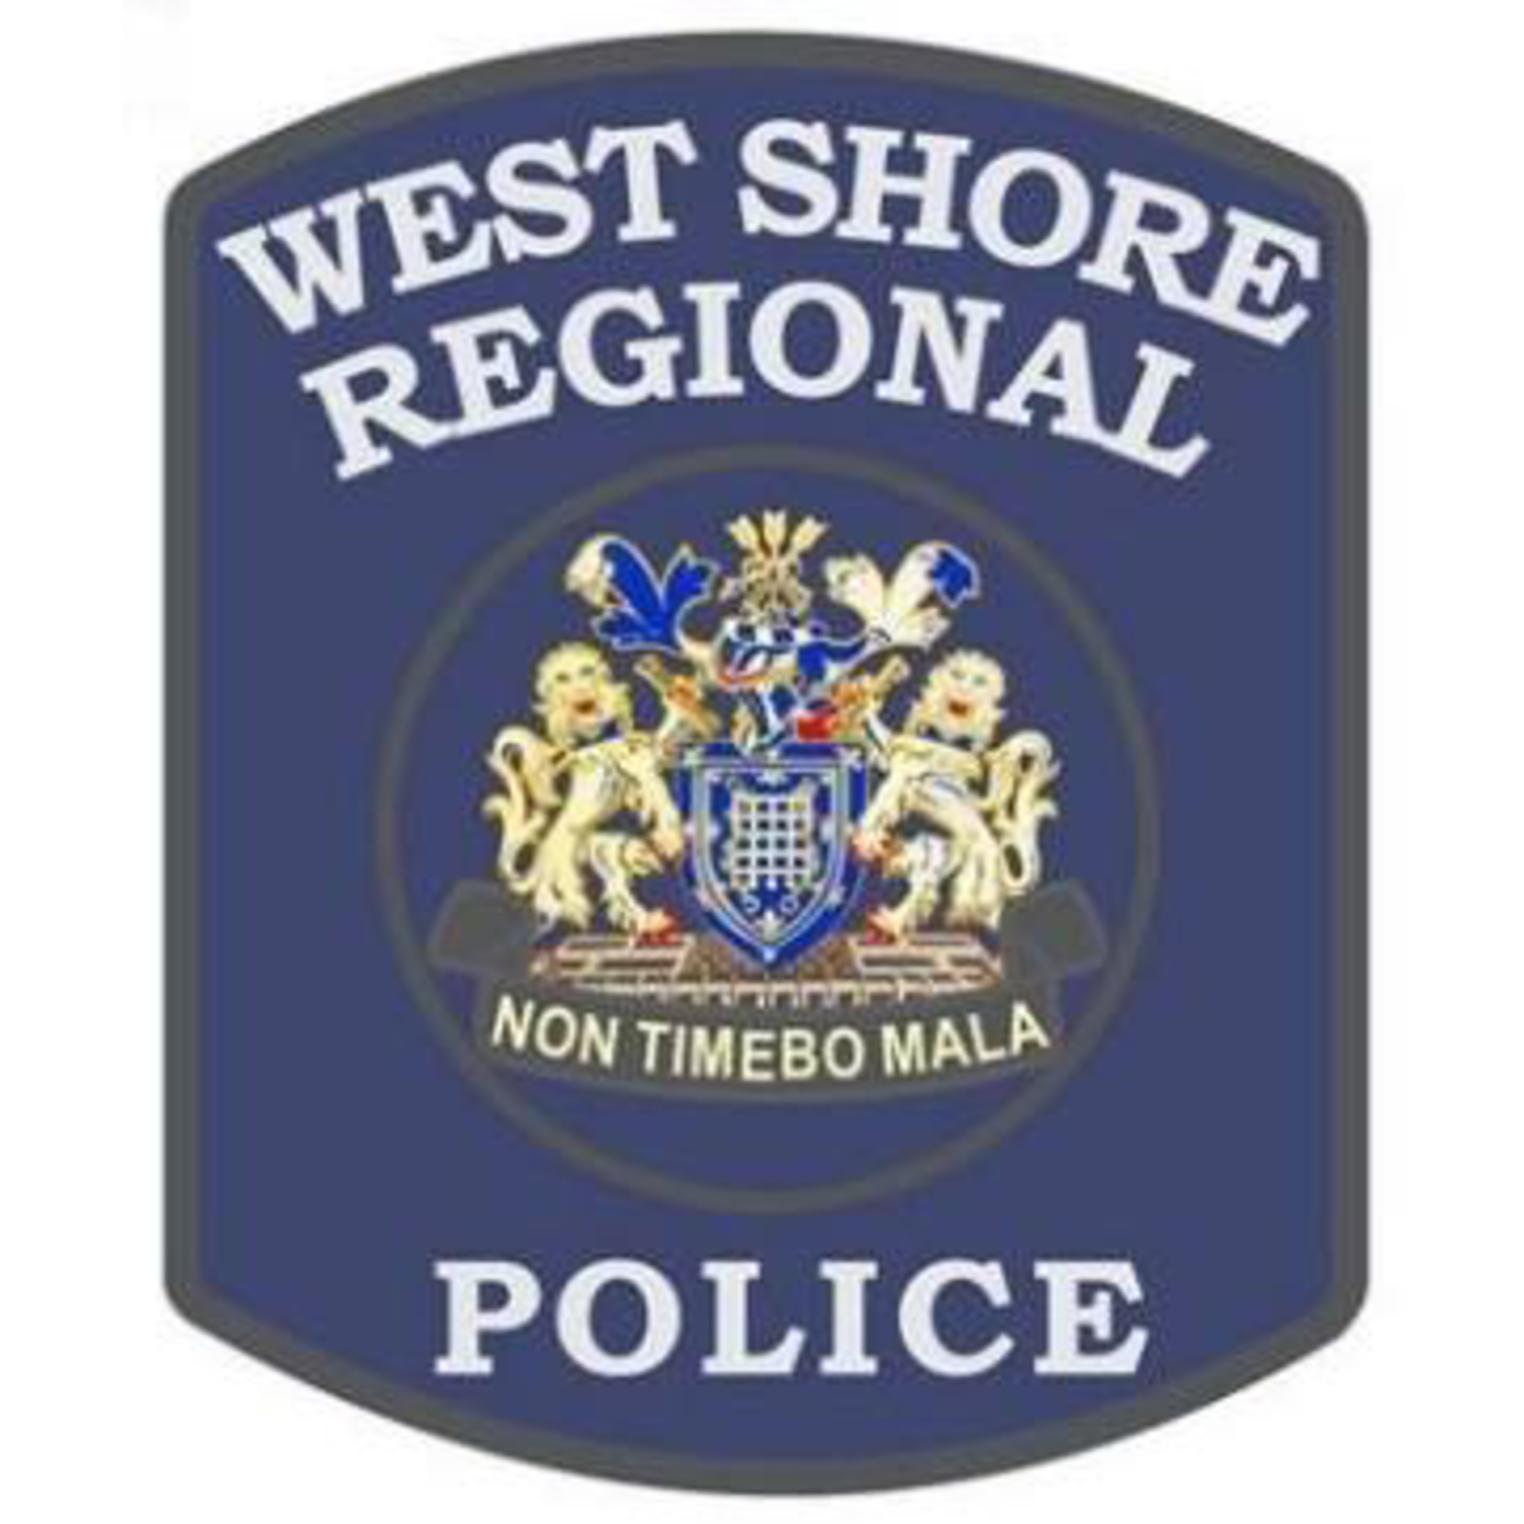 West Shore Regional Police Department